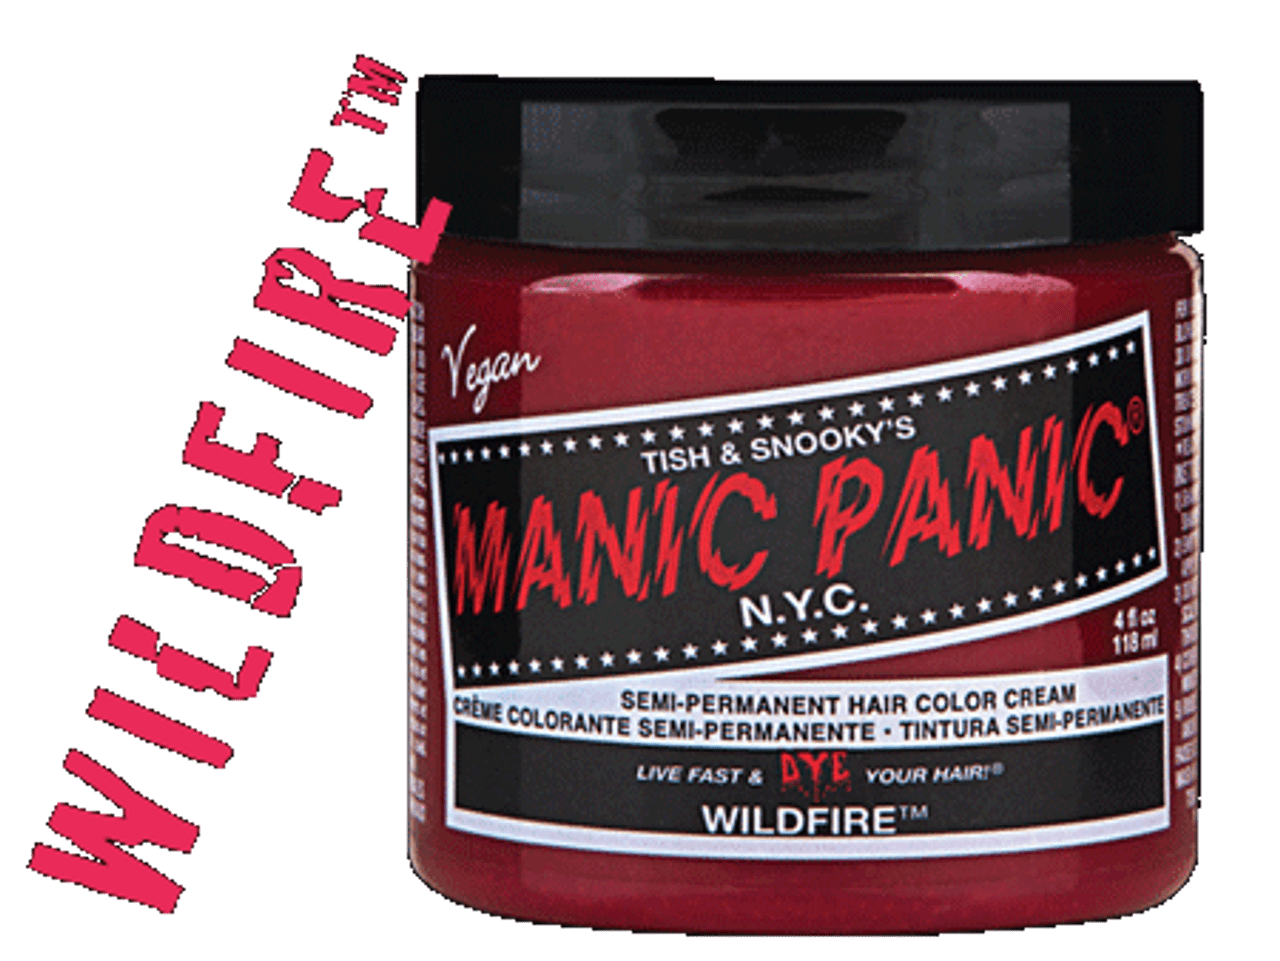 Manic Panic Semi-Permanent Hair Color Cream - wide 4